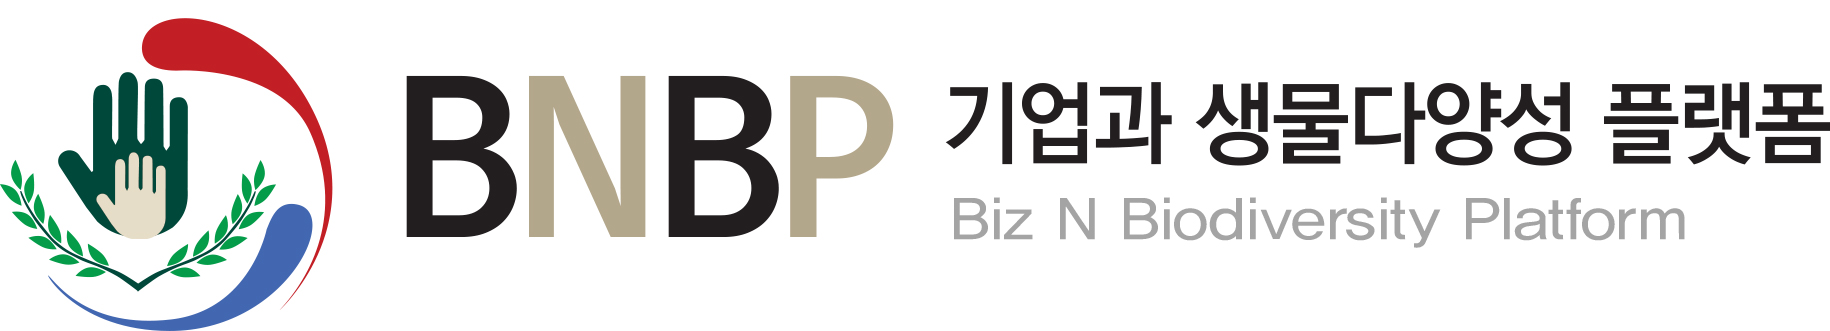 BNBP 기업과 생물다양성 플랫폼